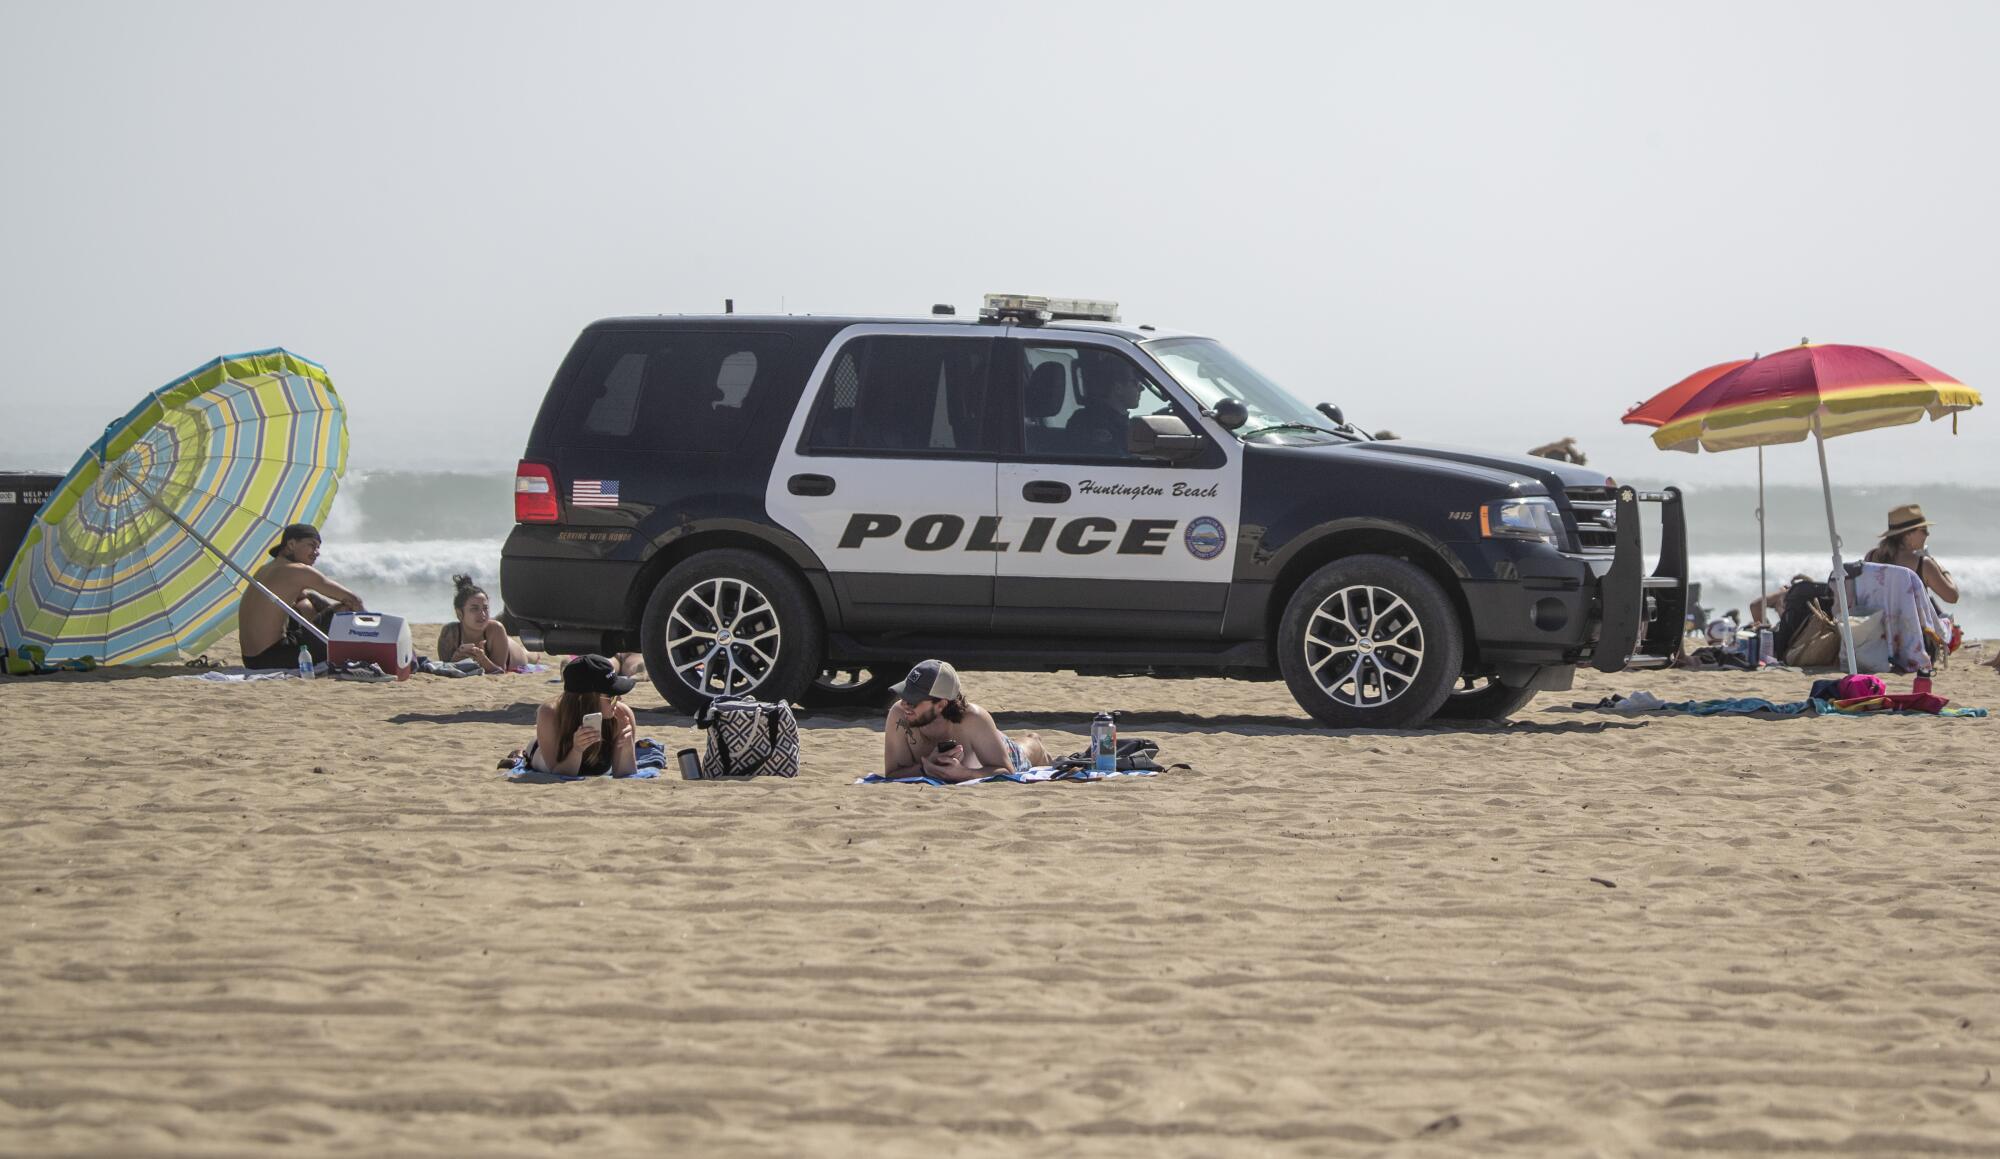 Huntington Beach police patrolled near the pier as thousands enjoyed a warm, sunny day at the beach.